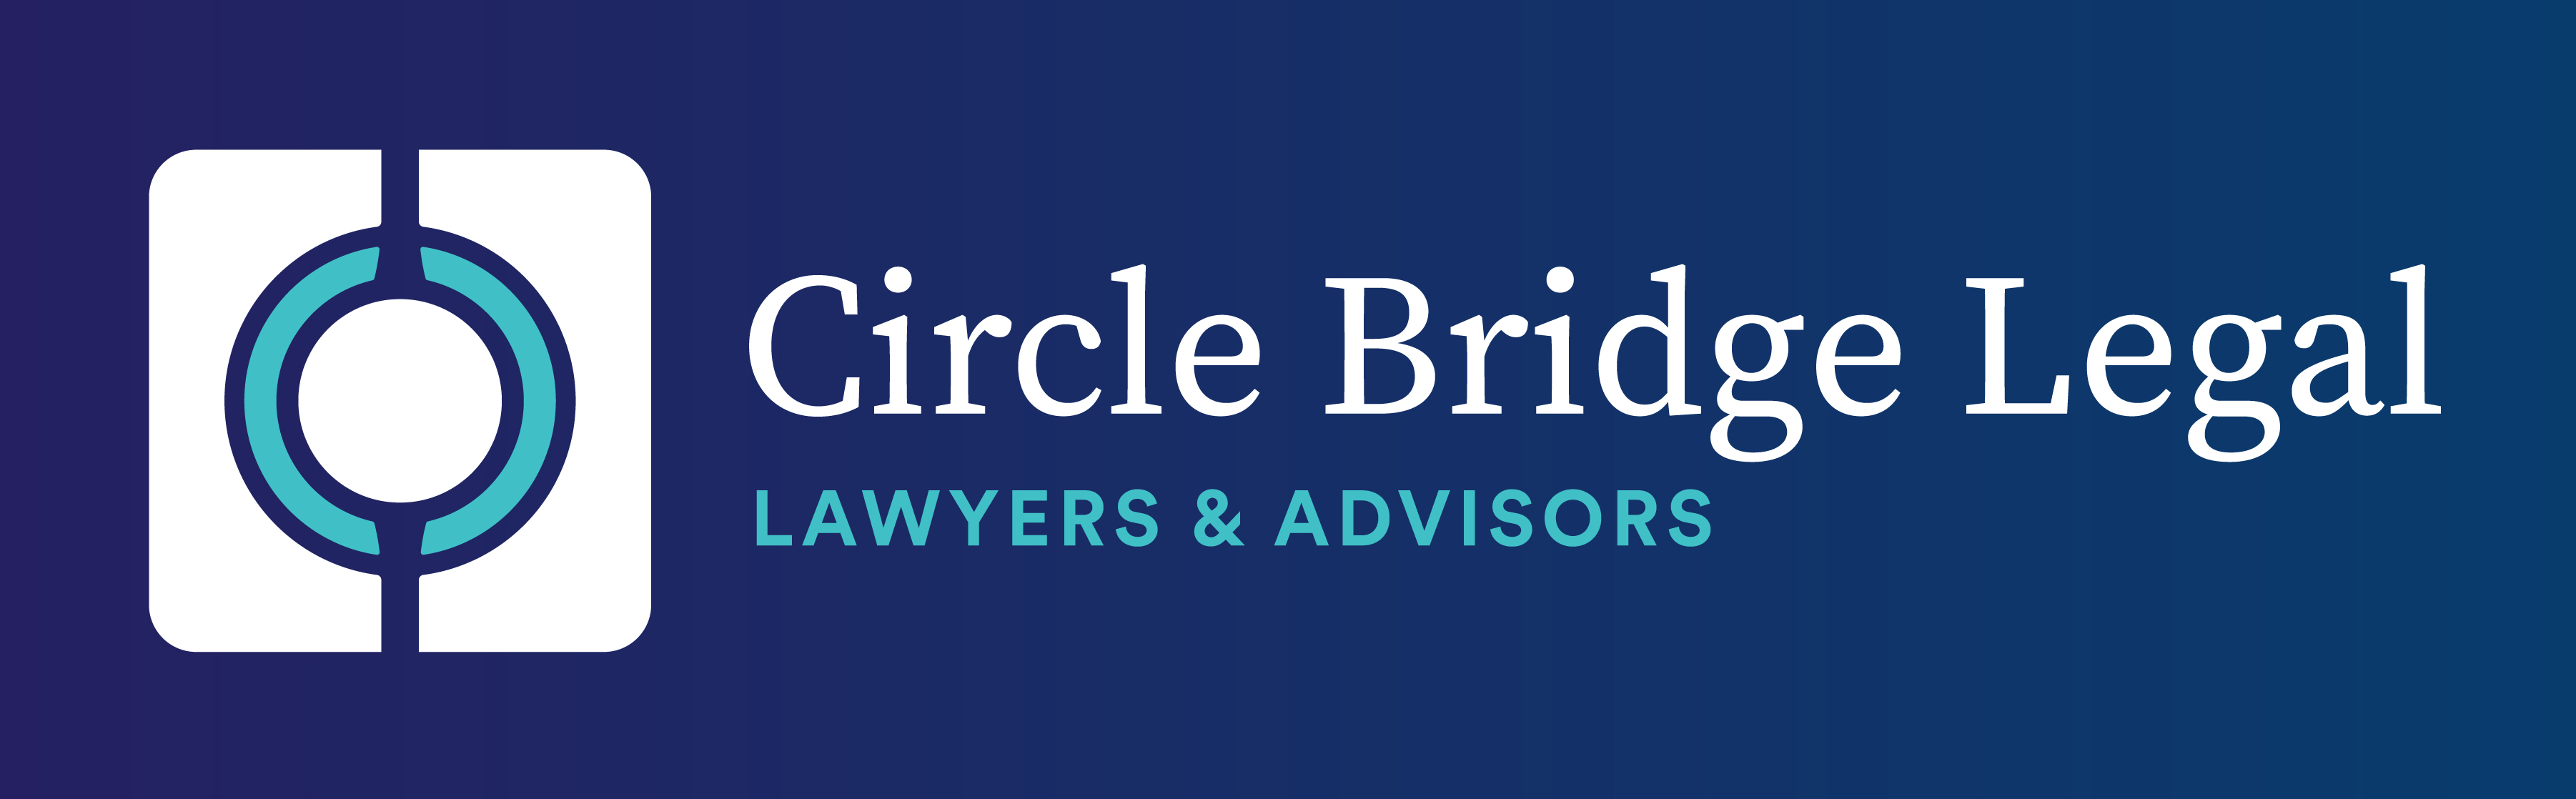 Circle Bridge Legal